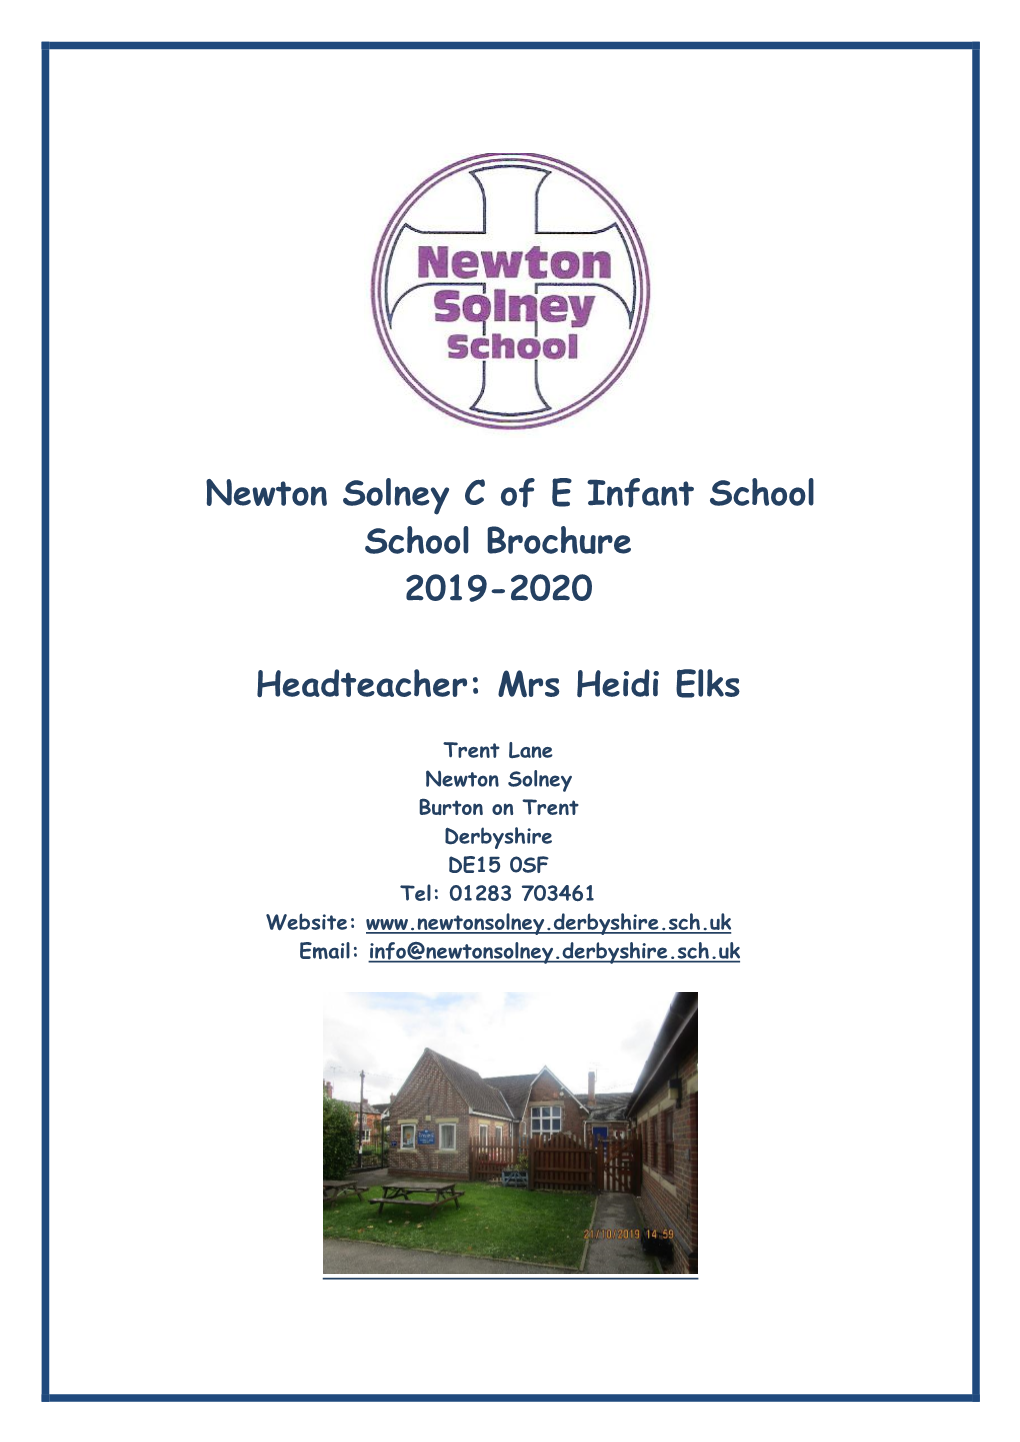 Newton Solney C of E Infant School School Brochure 2019-2020